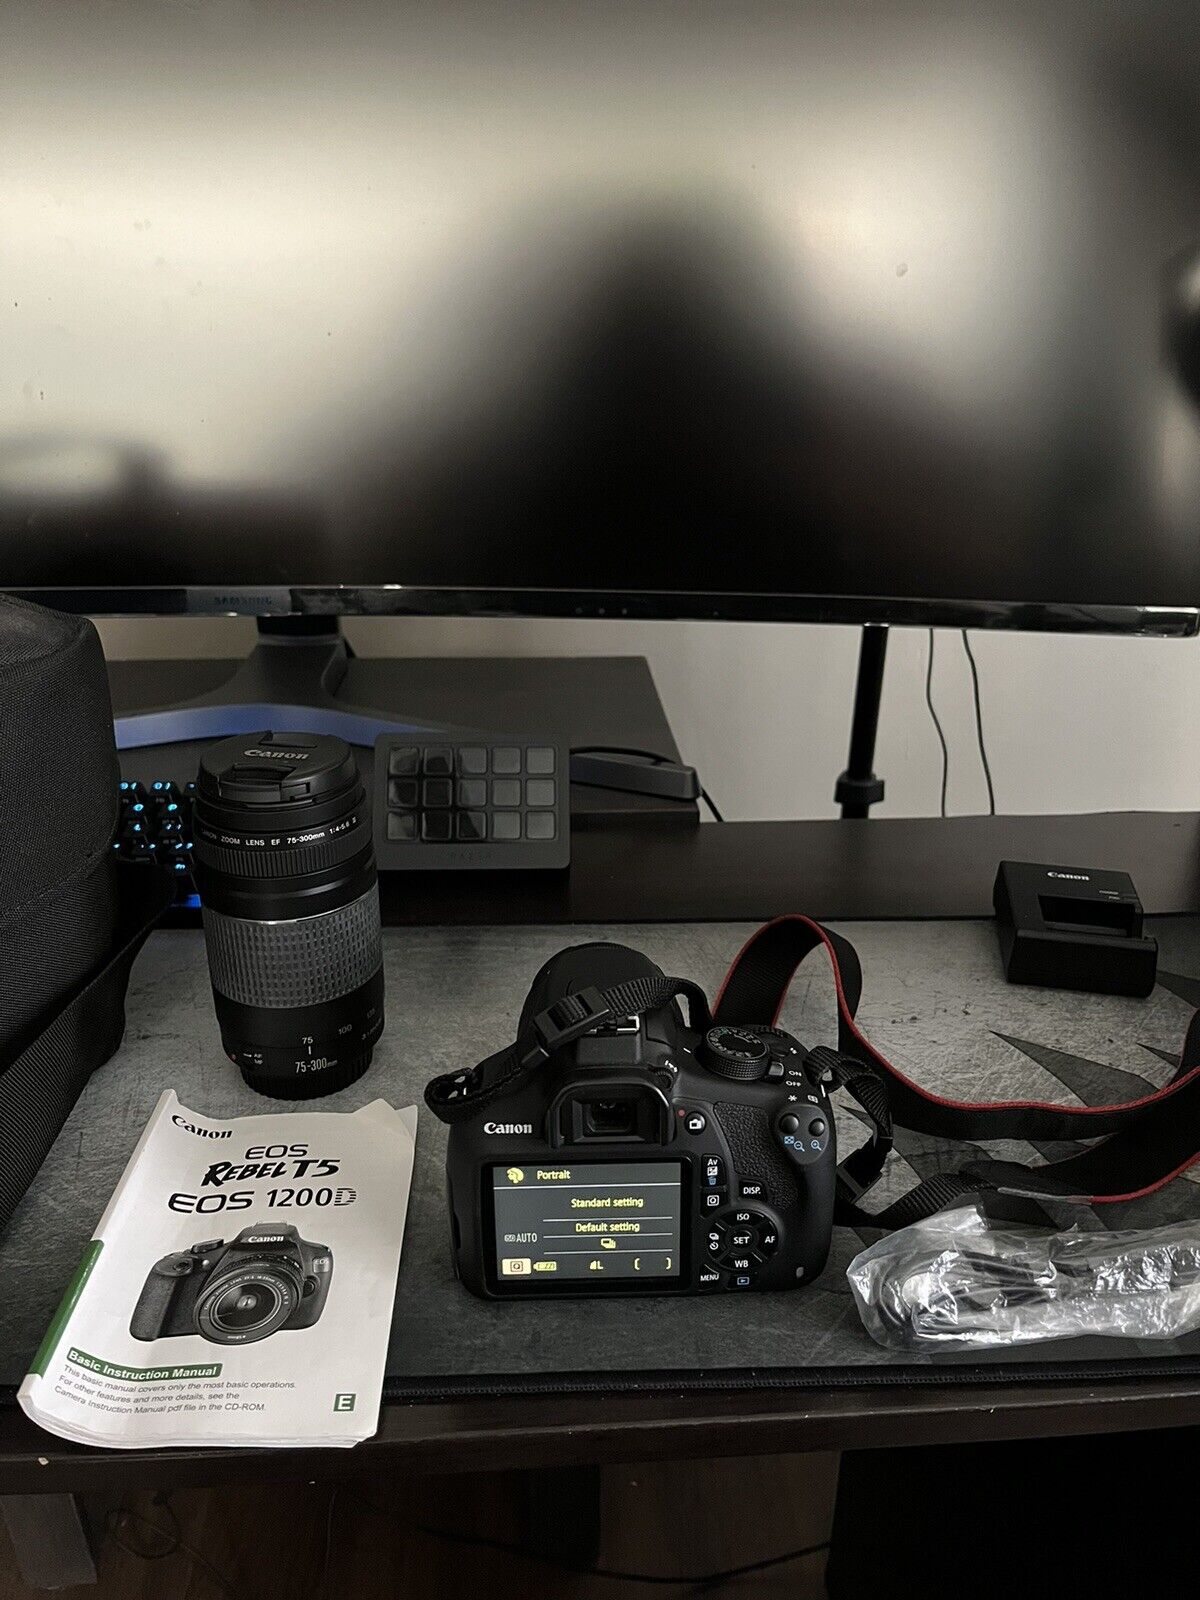 Canon EOS Rebel T5 / EOS 1200D 18.0MP Digital SLR Camera - Black (Kit w/ EF-S IS